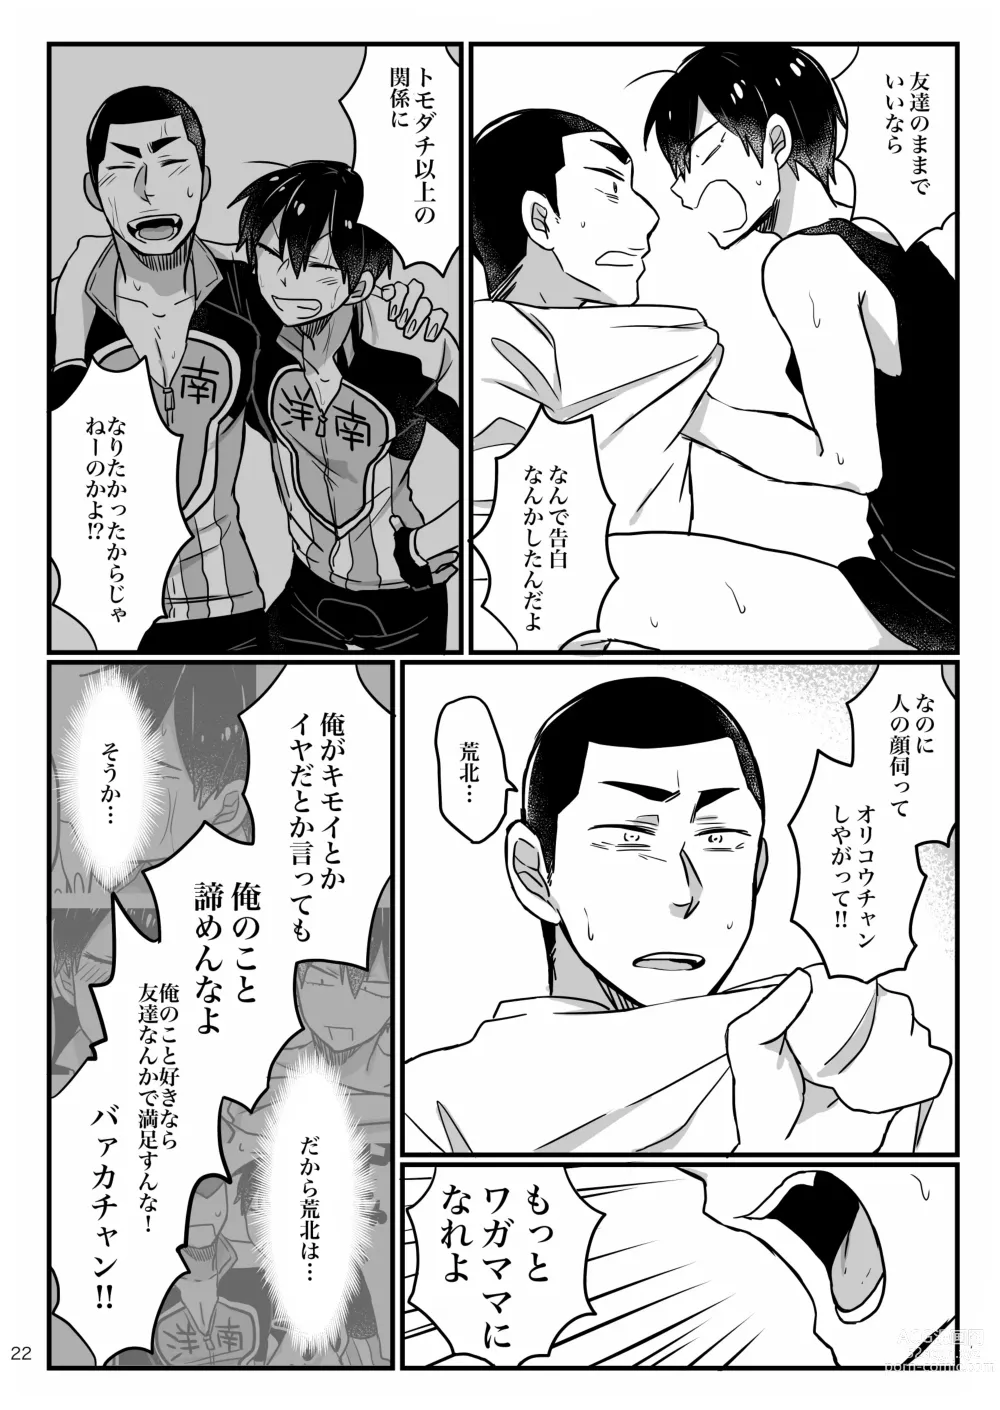 Page 20 of doujinshi Baby wo Namagoroshii!